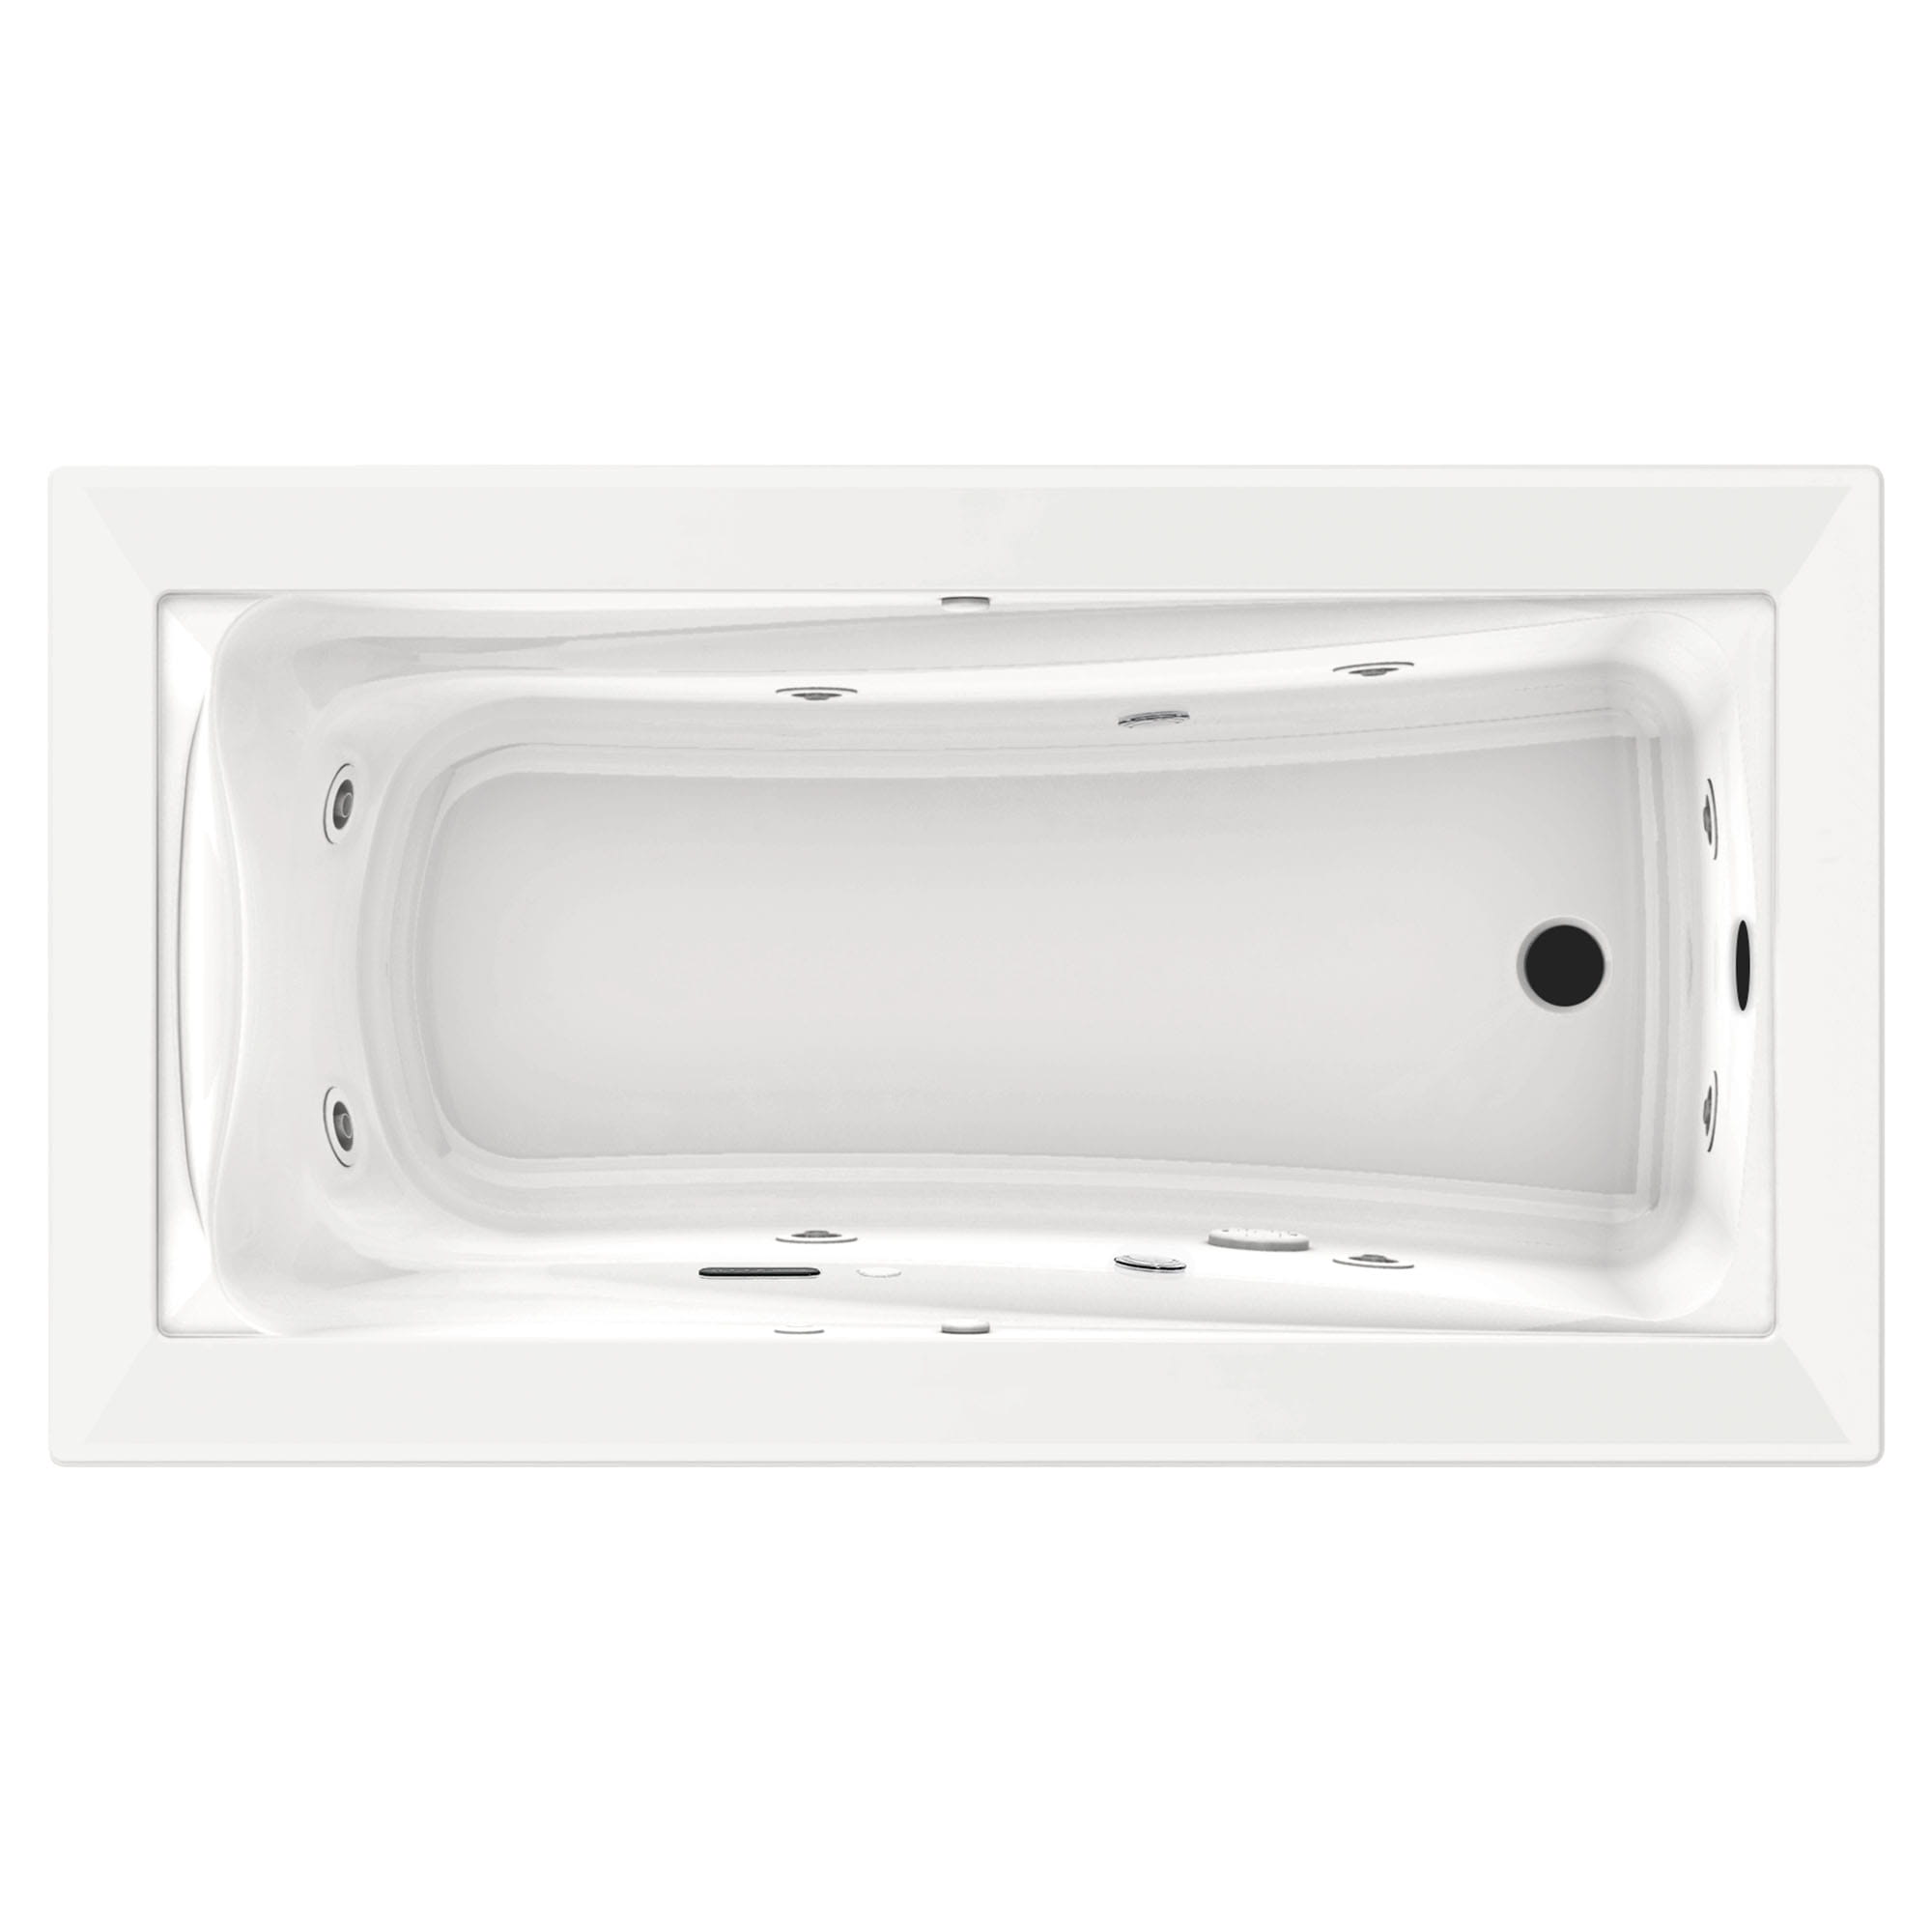 Green Tea® 72 x 36-Inch Drop-In Bathtub With EcoSilent® EverClean® Combination Spa System